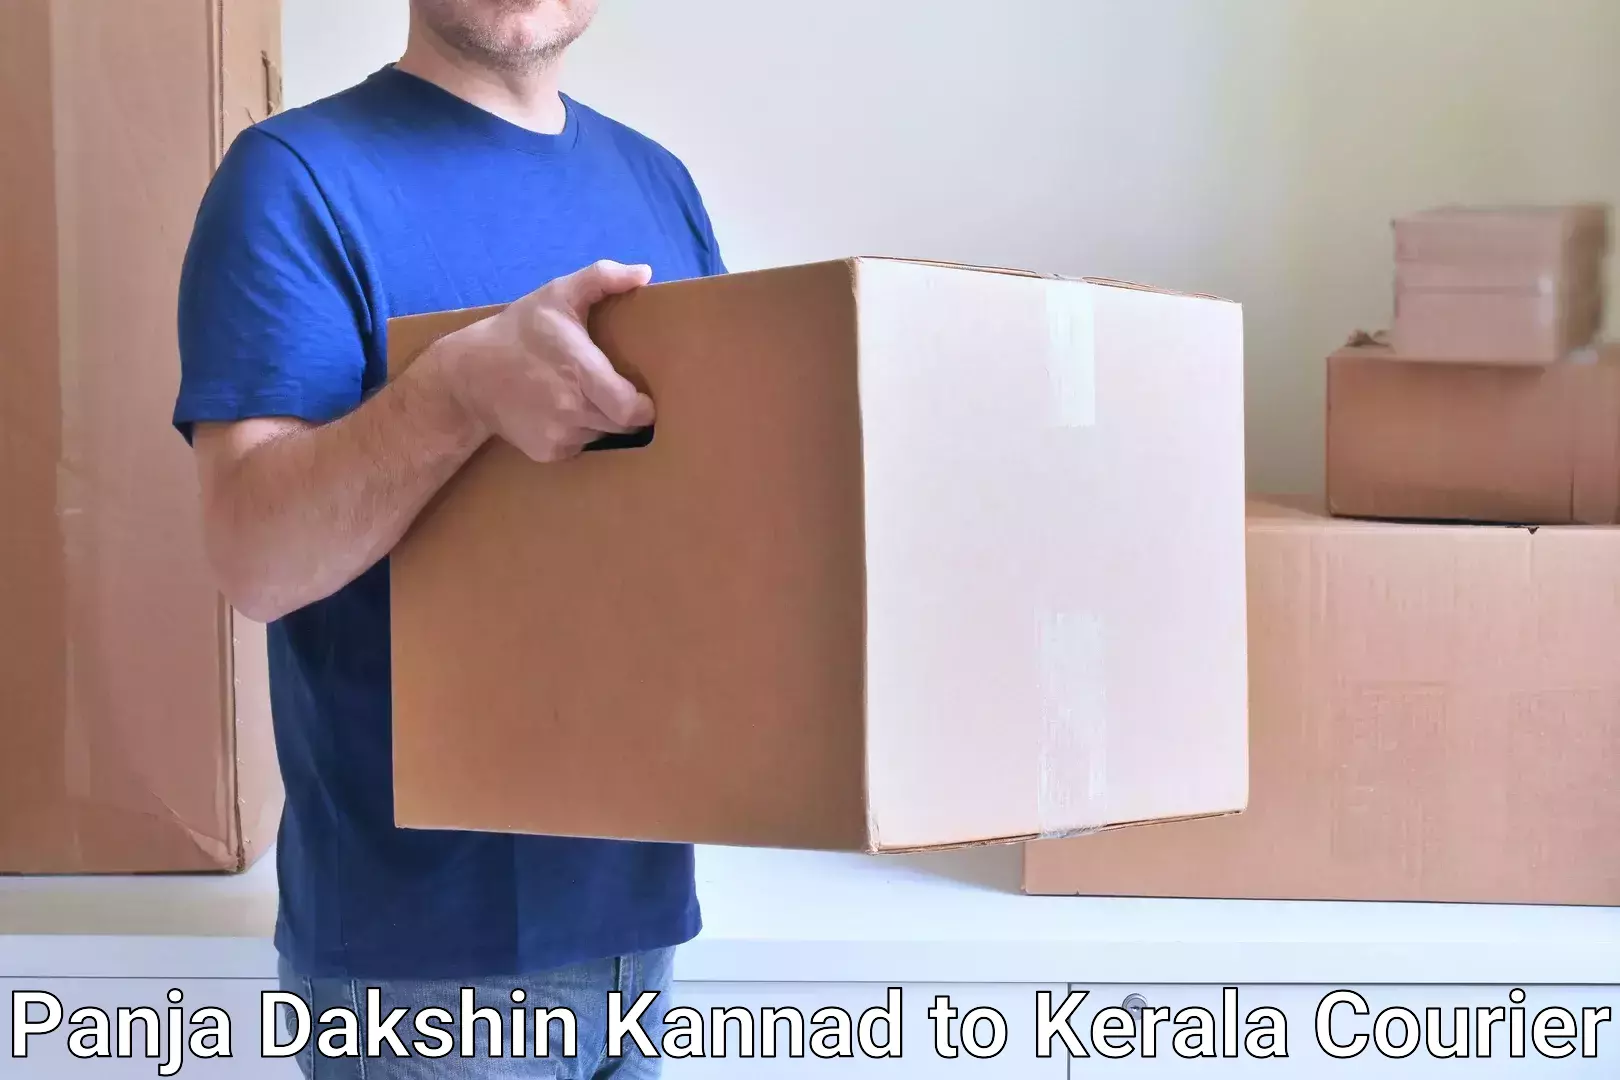 Tech-enabled shipping Panja Dakshin Kannad to Pathanamthitta